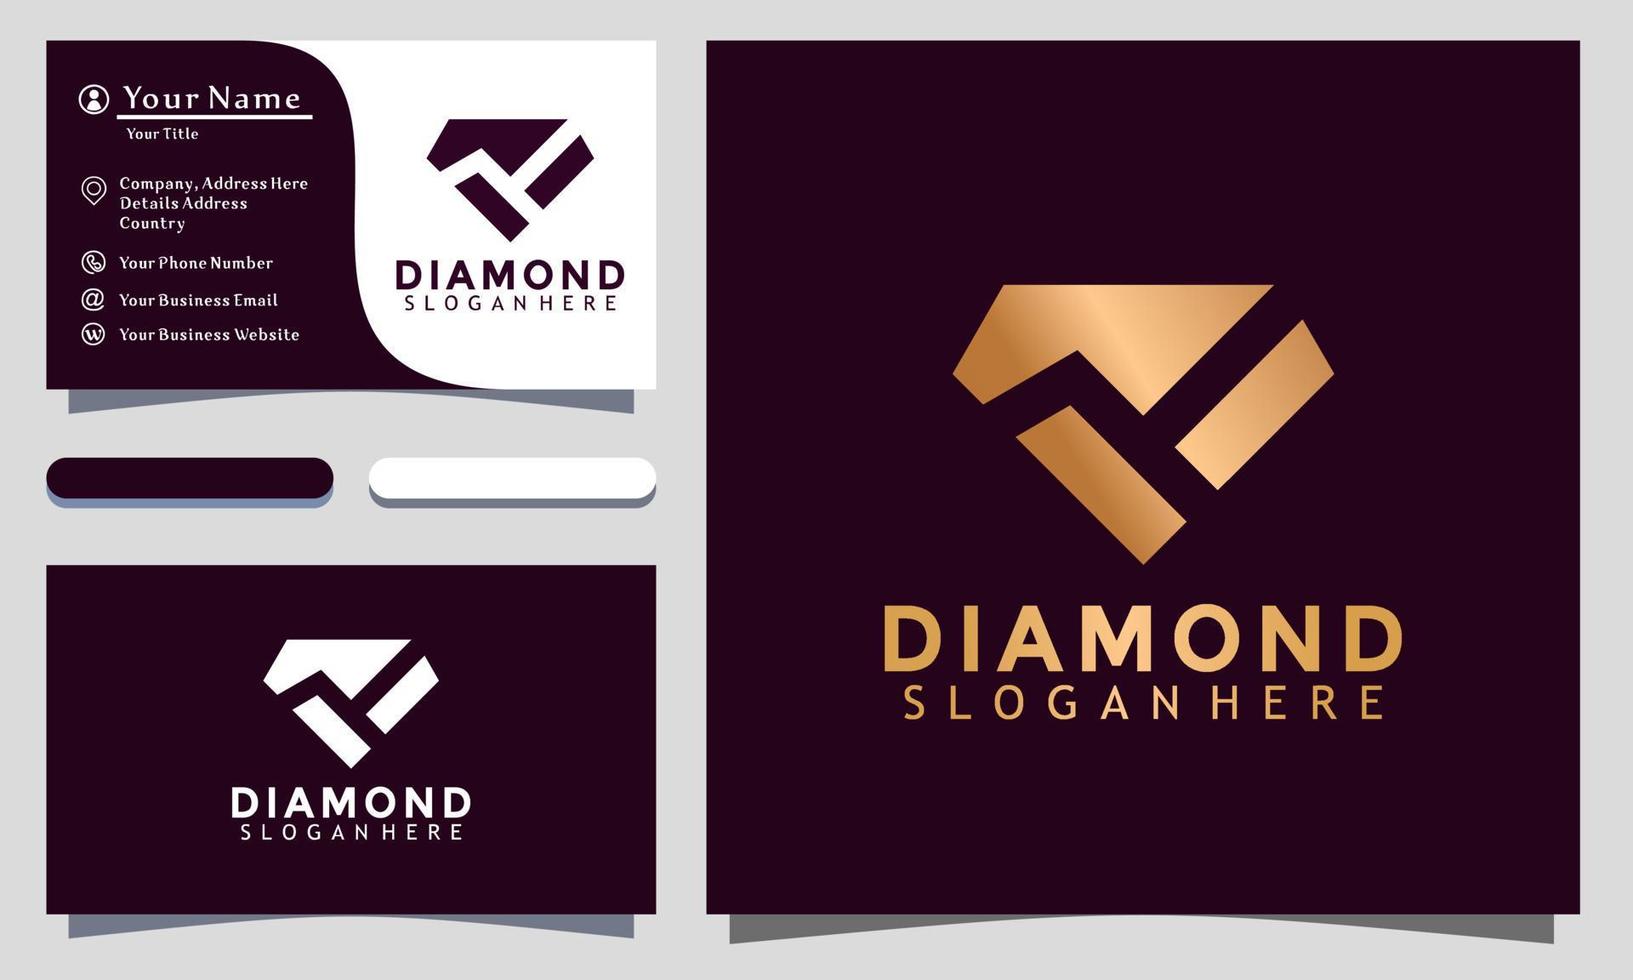 Abstract Diamond Jewelry Modern logo design vector Illustration, business card template